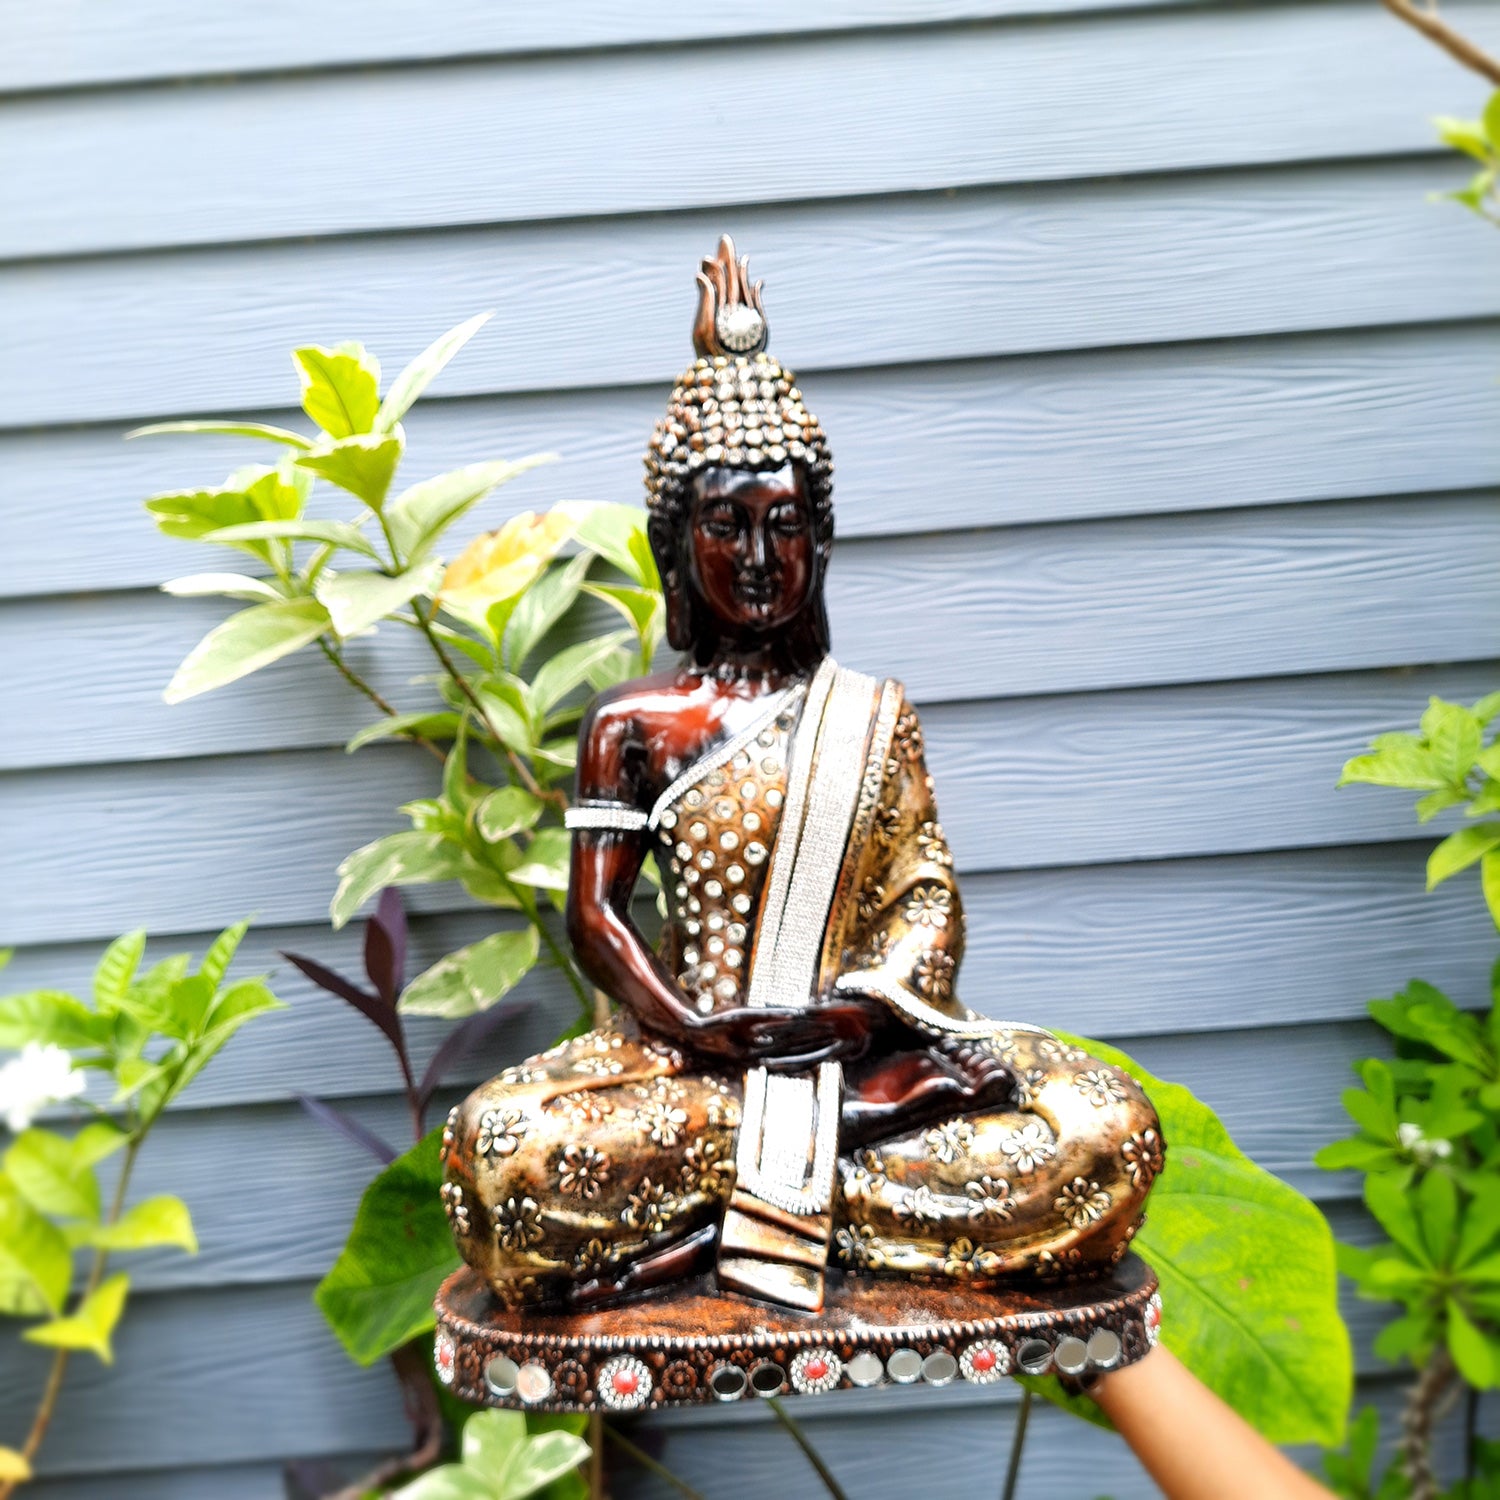 Buddha In Meditation Statue | Lord Gautam Buddha Big Idol Showpiece - For Living room, Home, Table, Centerpiece, Meditation Room, Office Decor & Gift -18 Inch - Apkamart